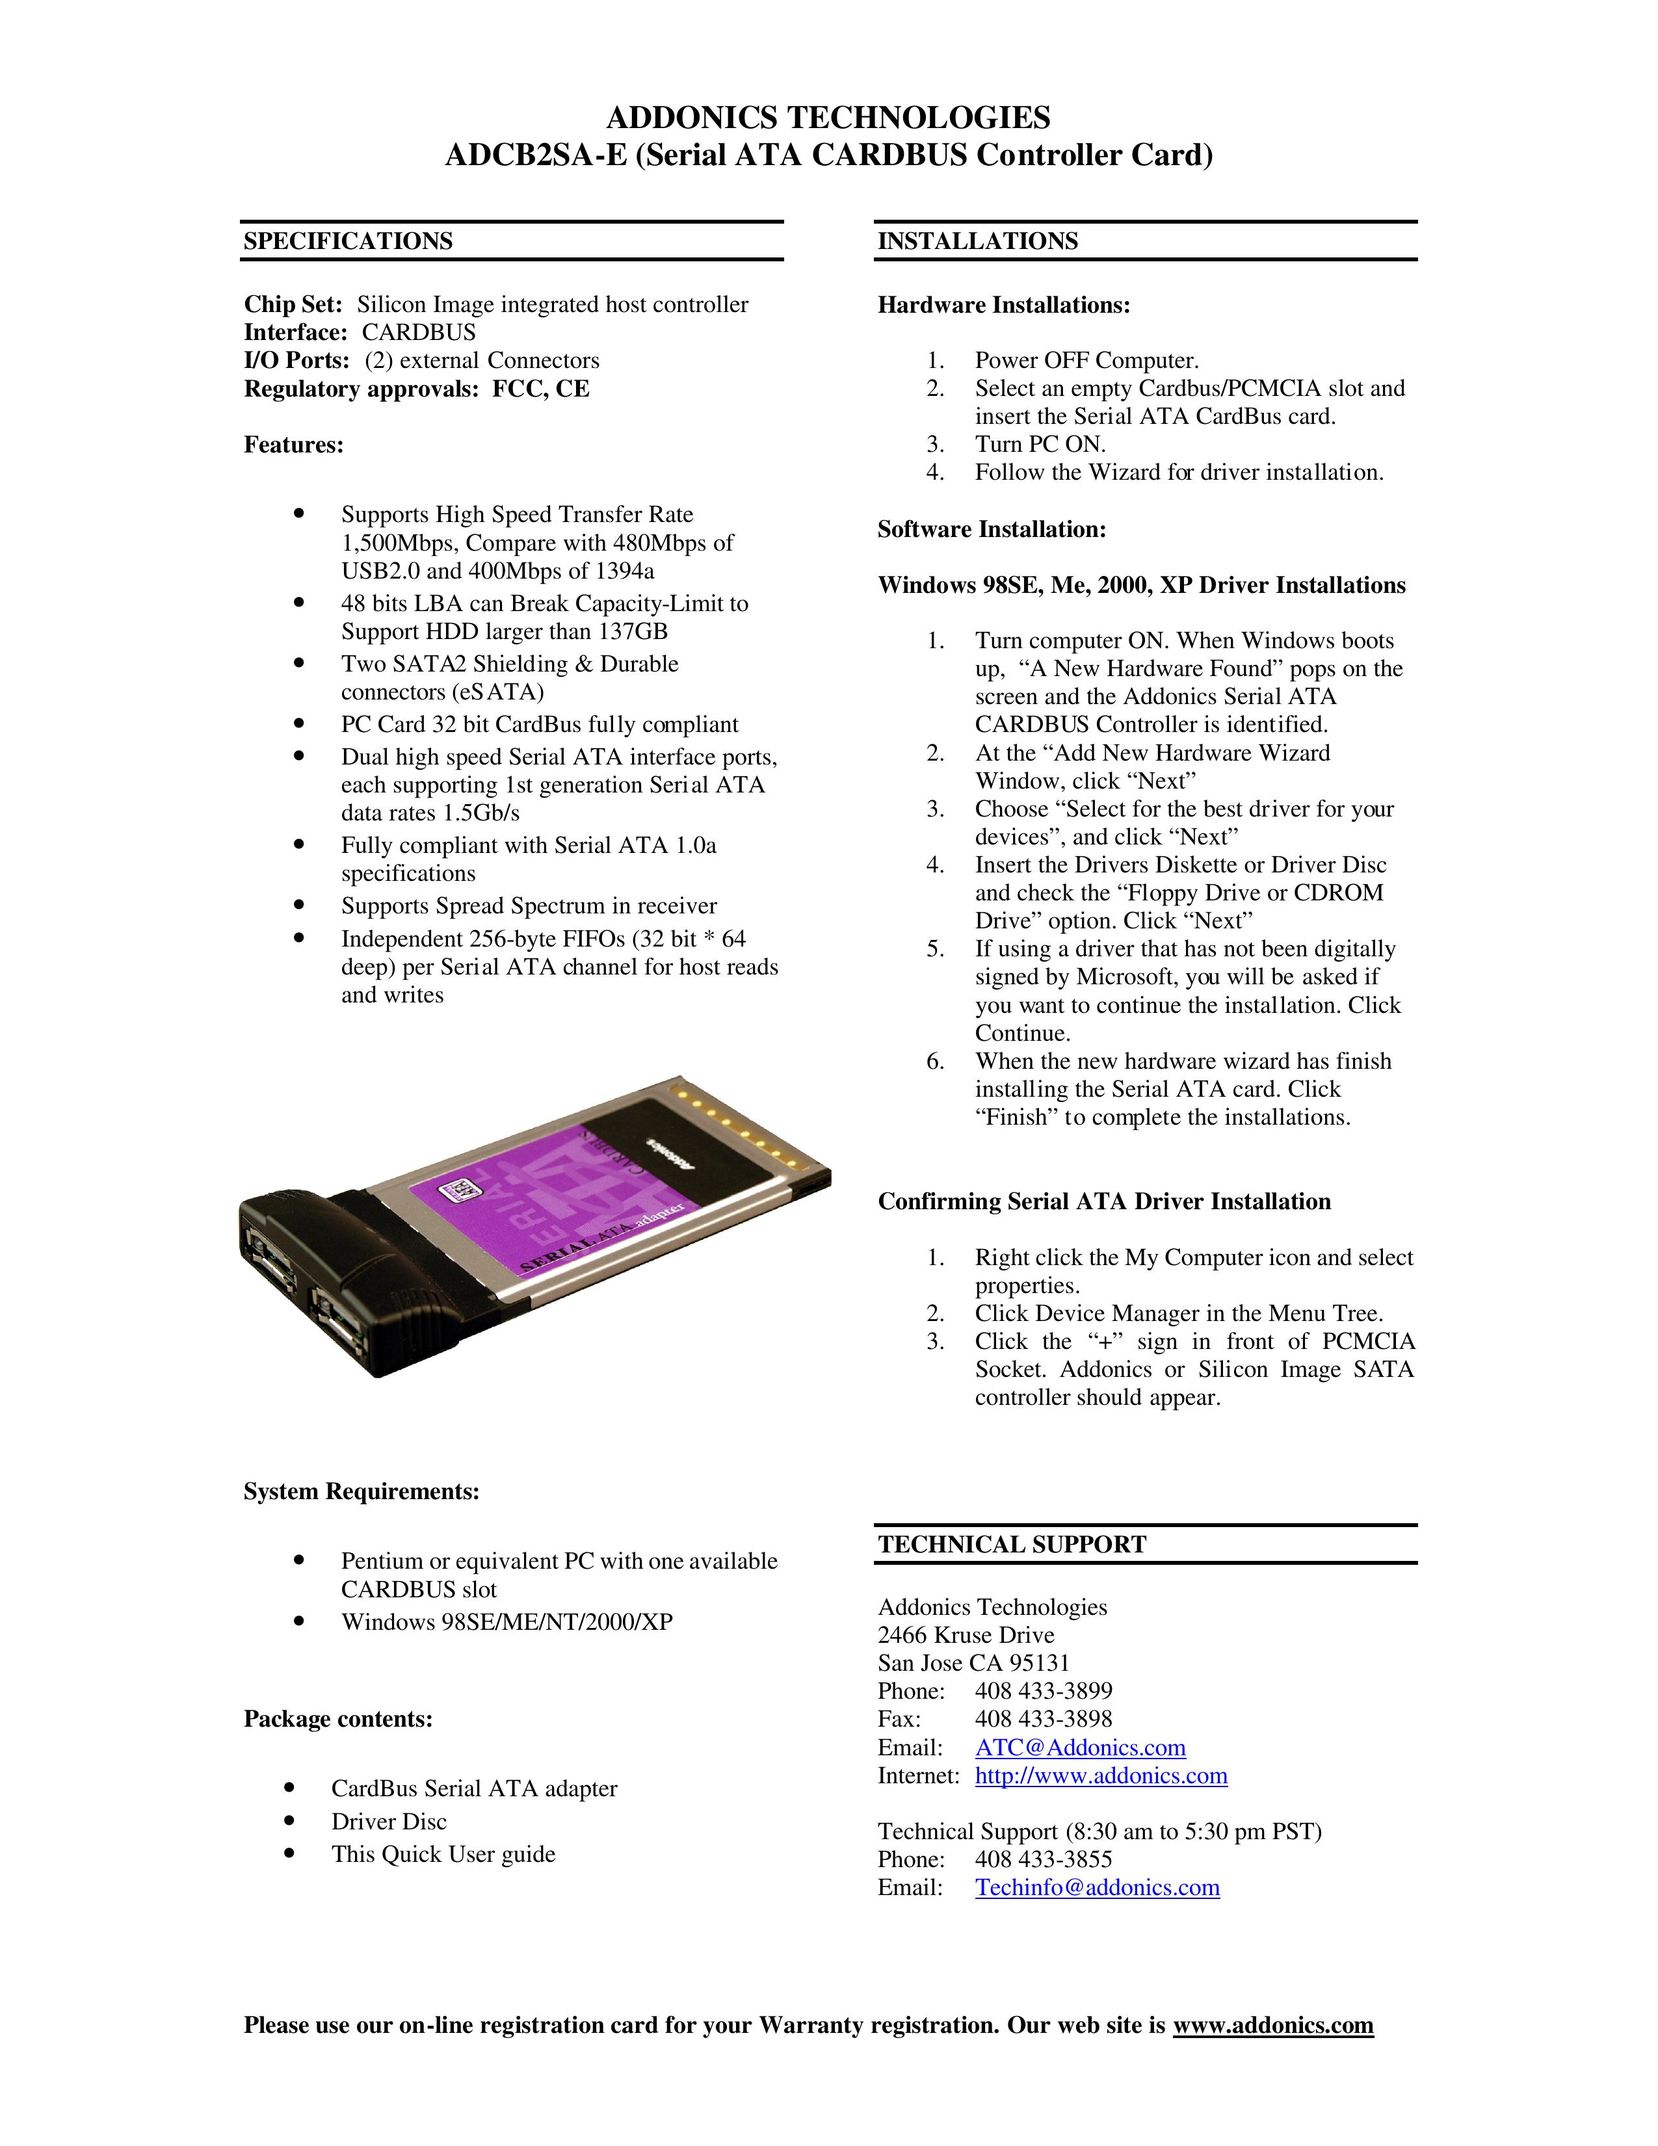 Addonics Technologies ADCB2SA-E Network Card User Manual